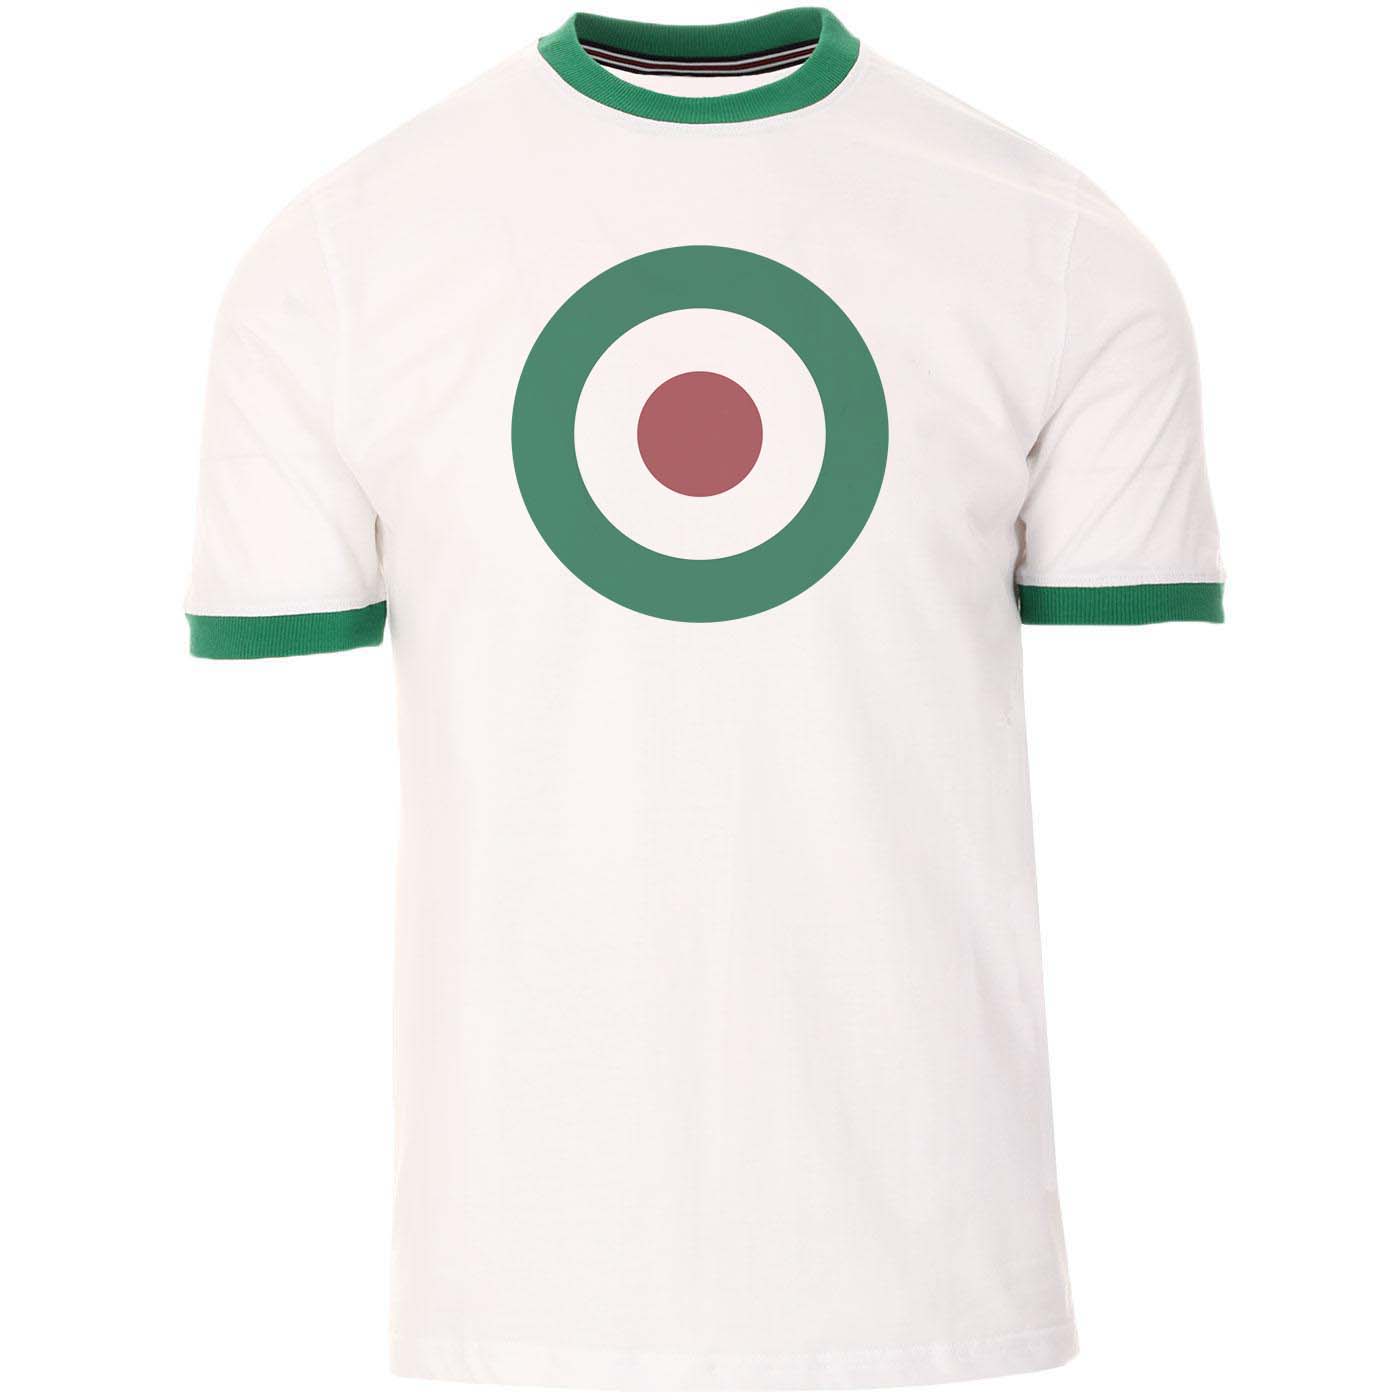 OXKNIT Men Vintage Clothing 1970s Mod Style Casual Mod Printed Bullseye Green Short Sleeve Retro T-Shirt